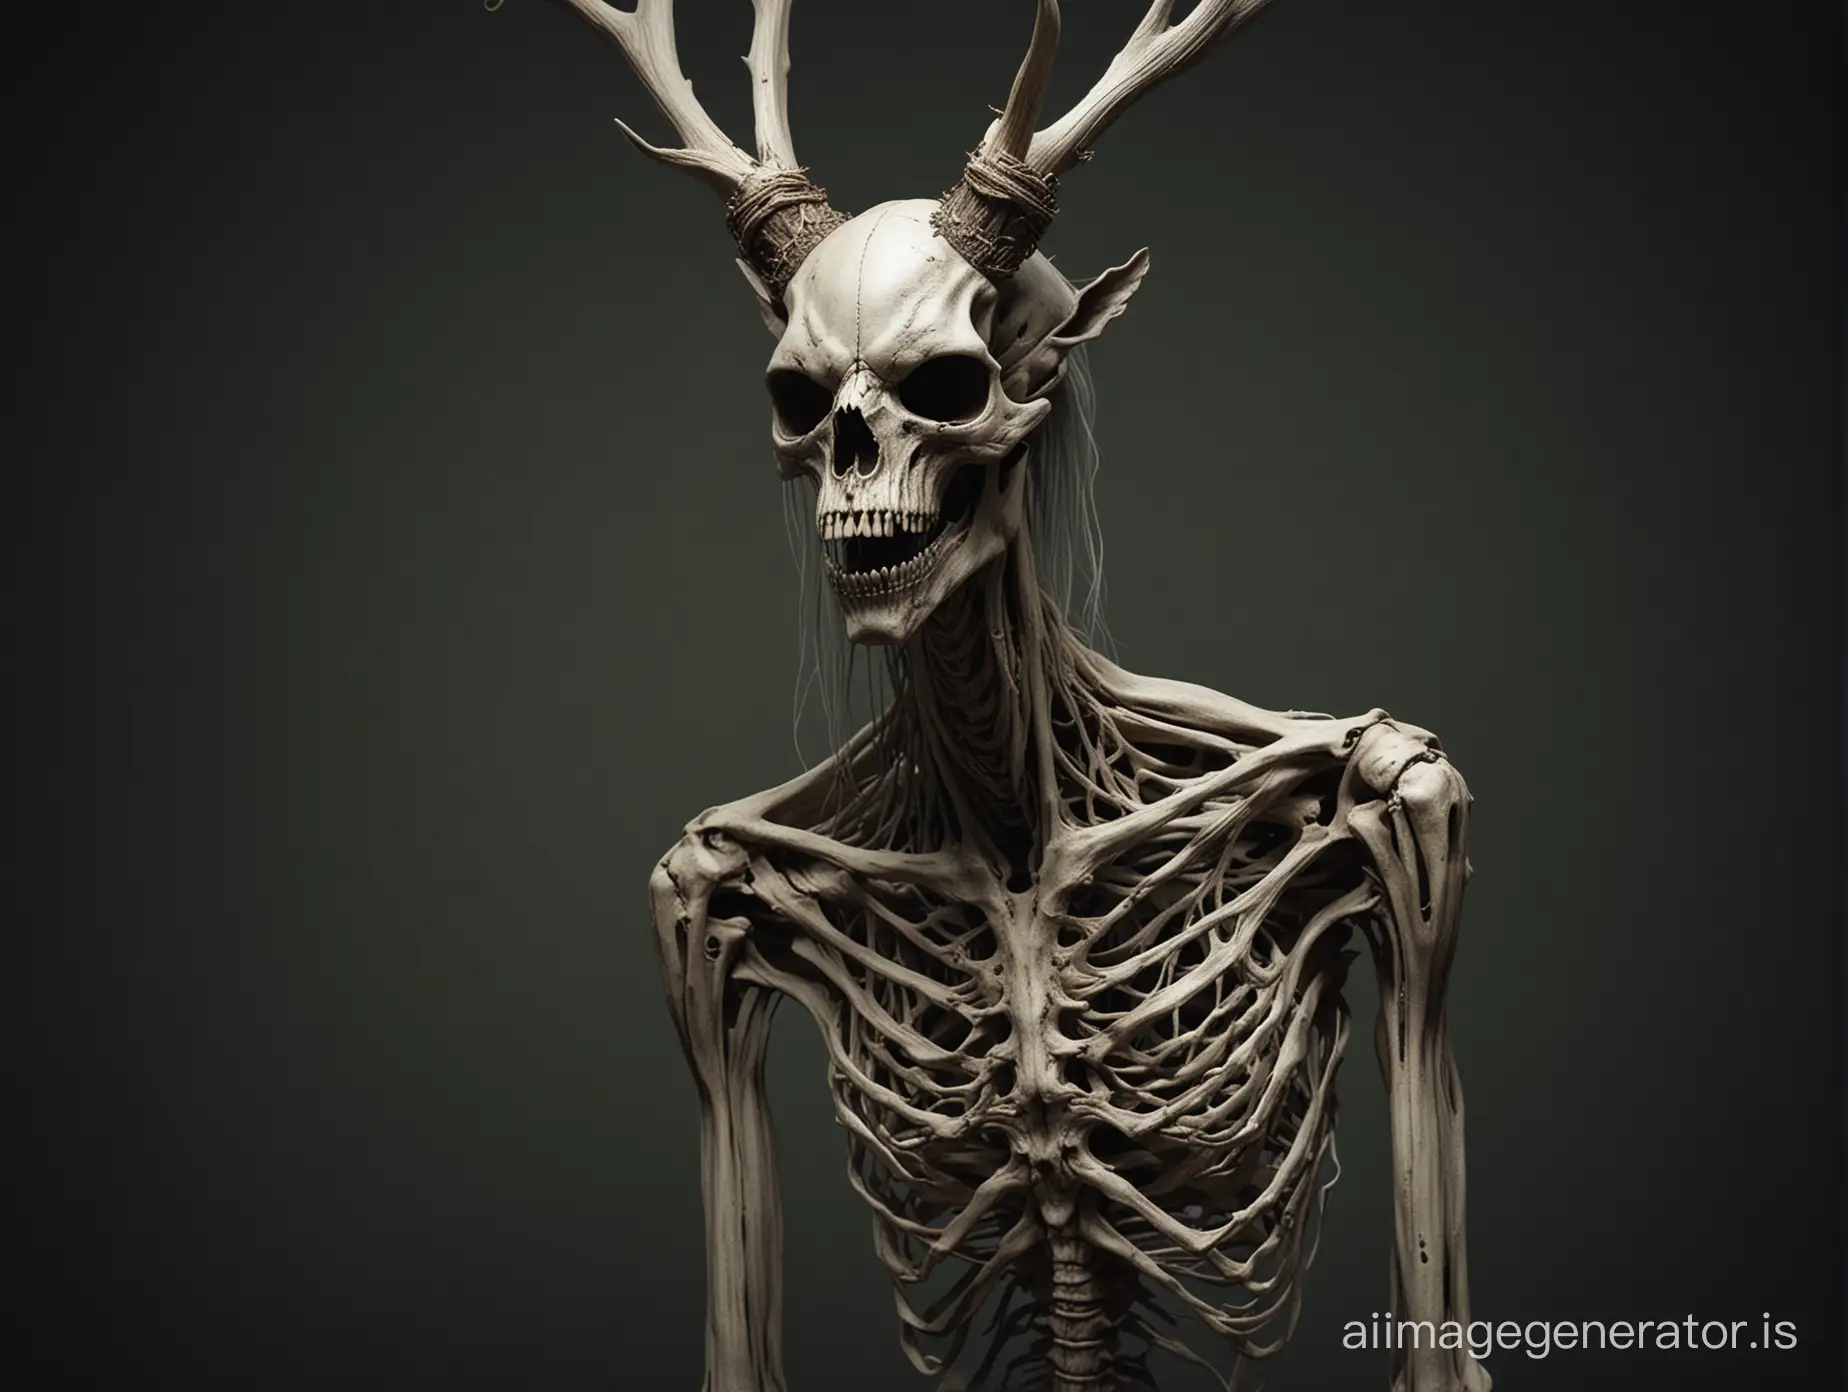 Eerie-Wendigo-Folk-Horror-Starving-Creature-with-Deer-Skull